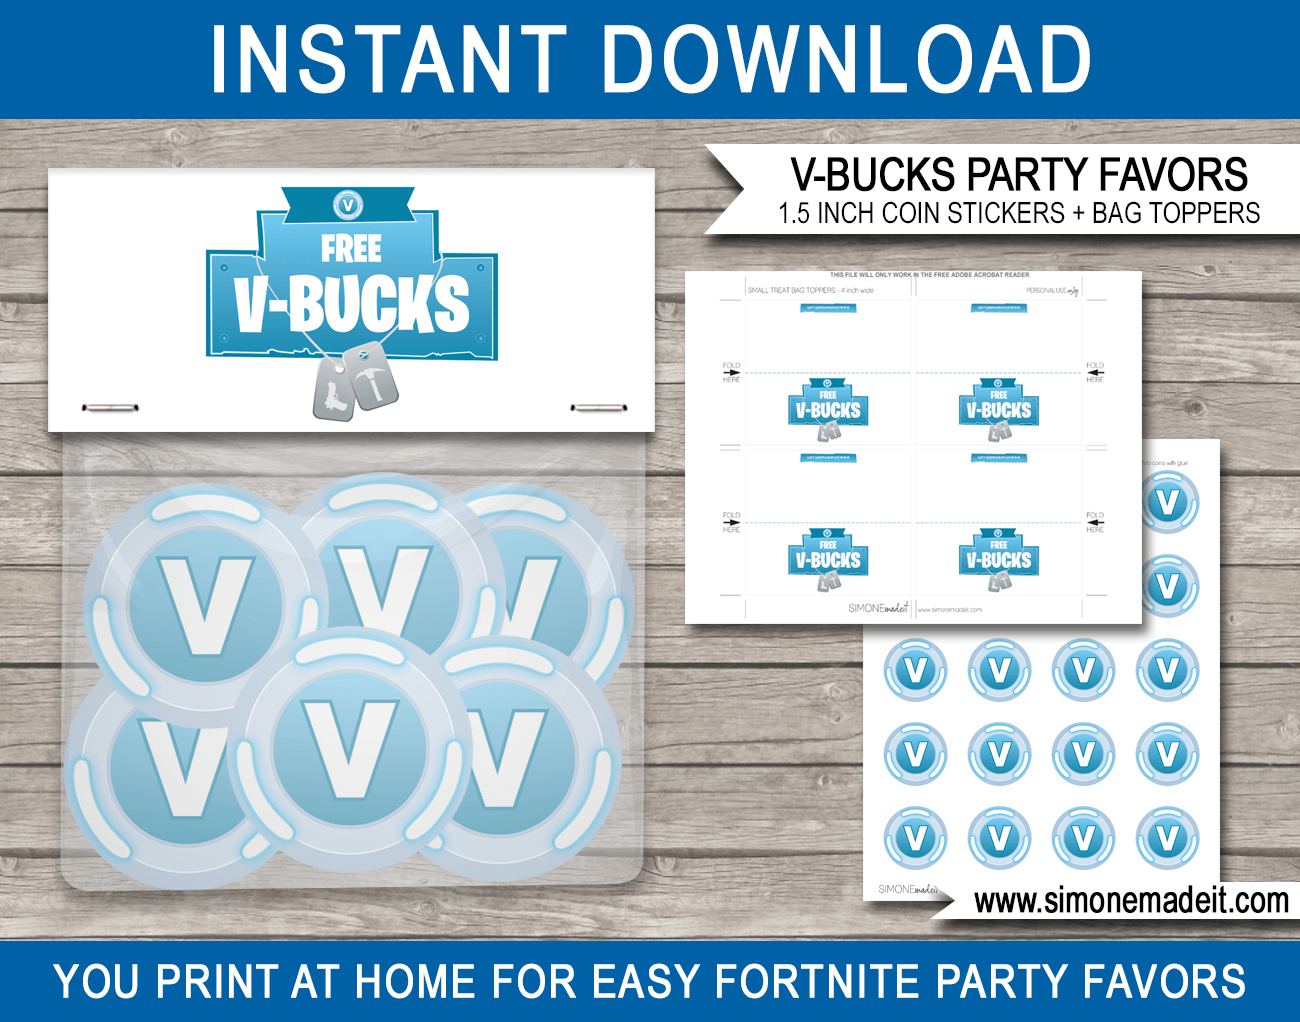 Fortnite V-Bucks Printable Party Favors | V-Bucks Stickers &amp;amp; Bag Toppers - Free Fortnite Party Printables